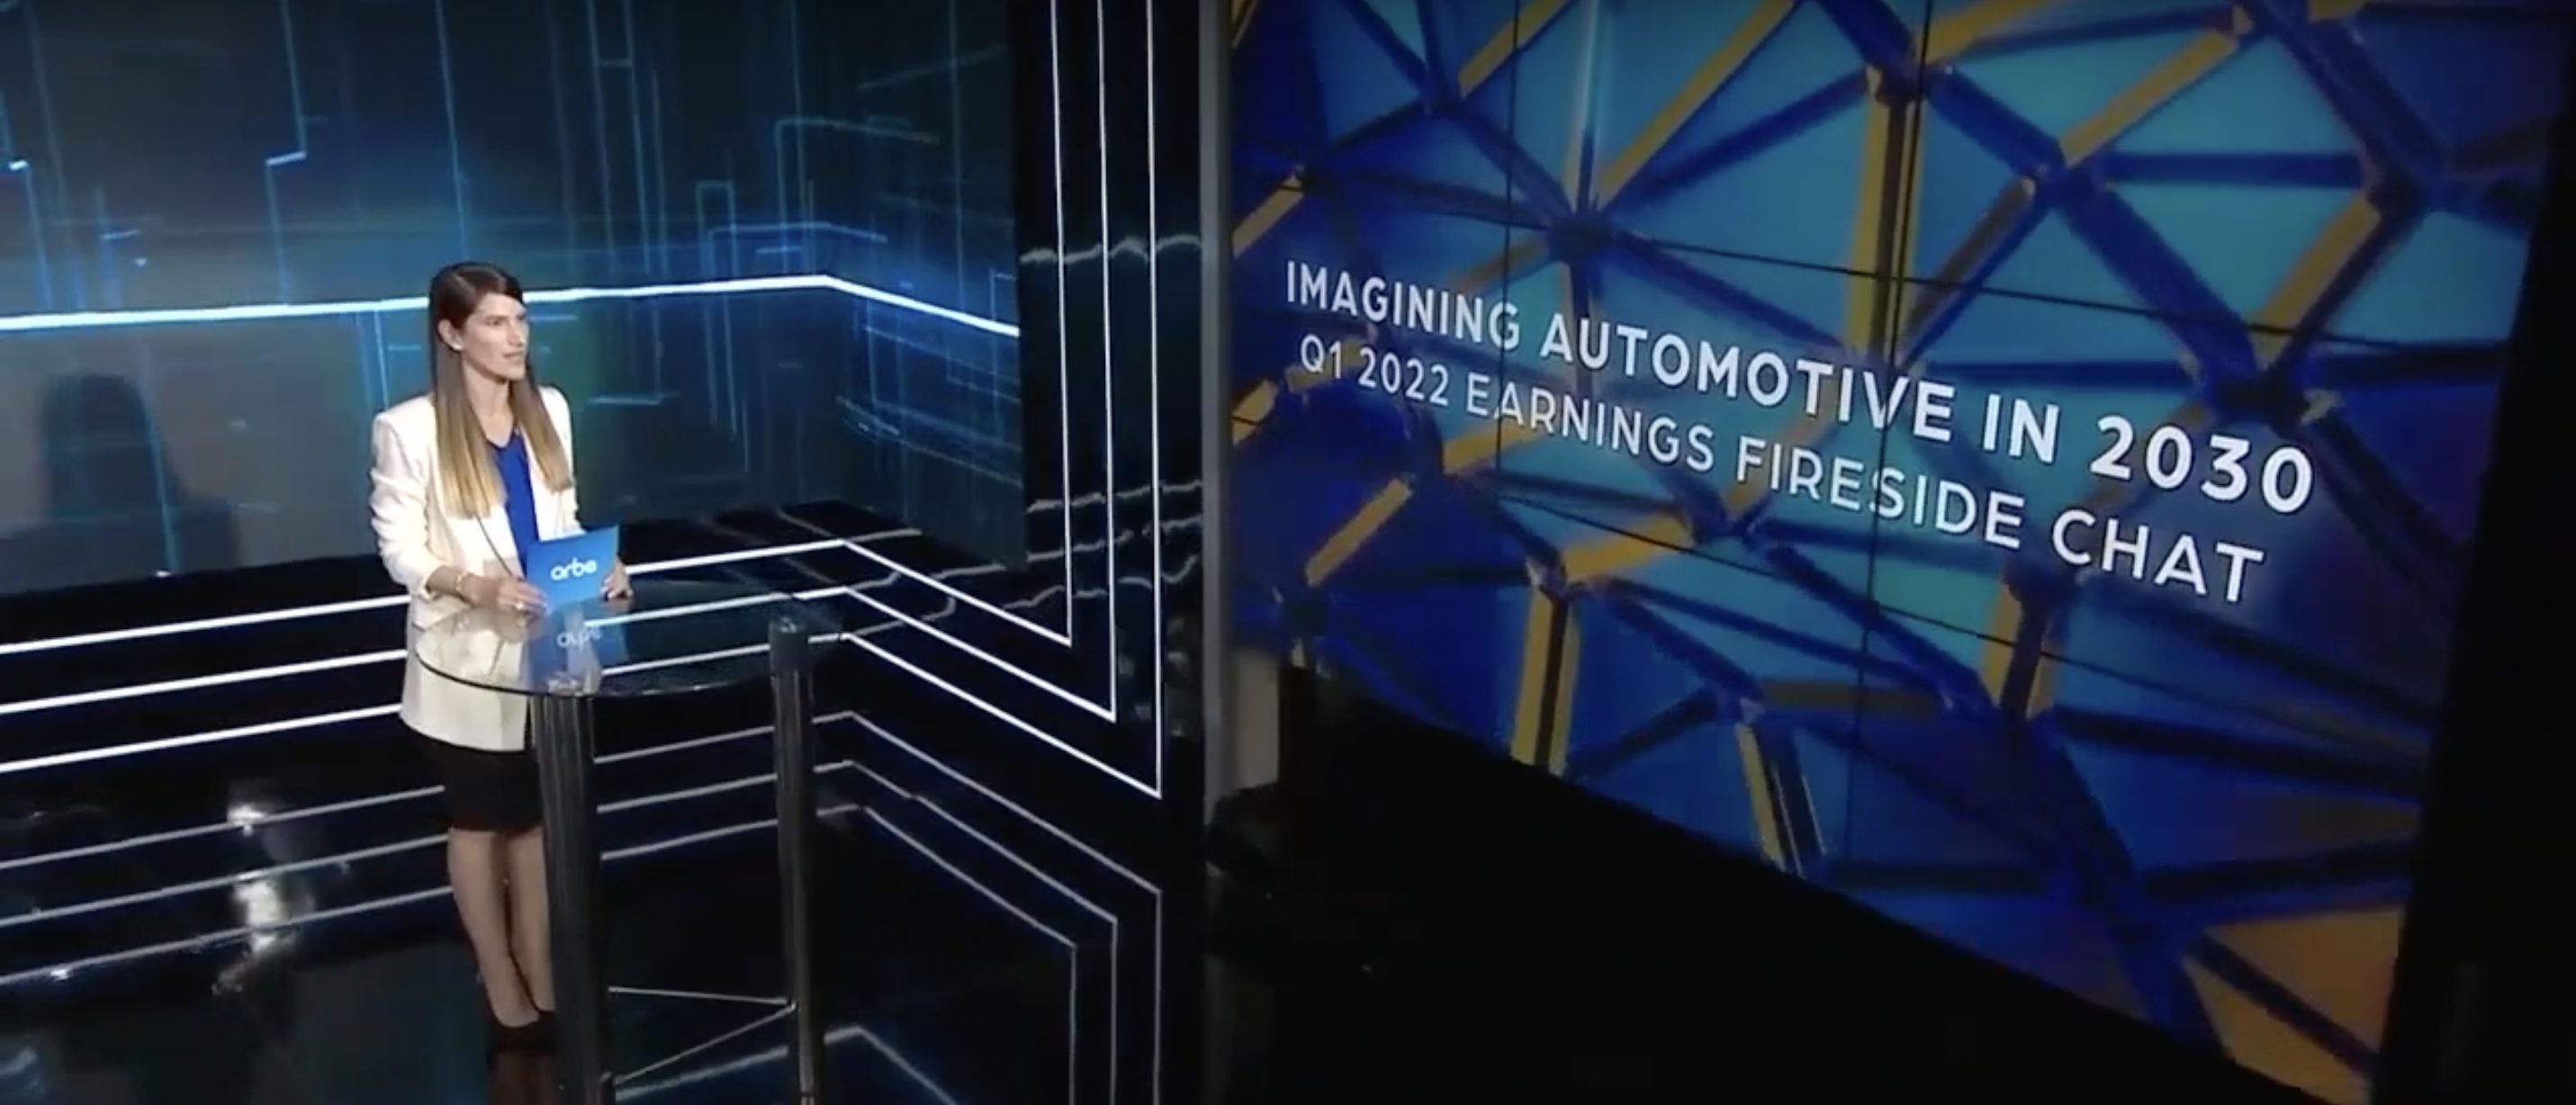 Imagining Automotive in 2030